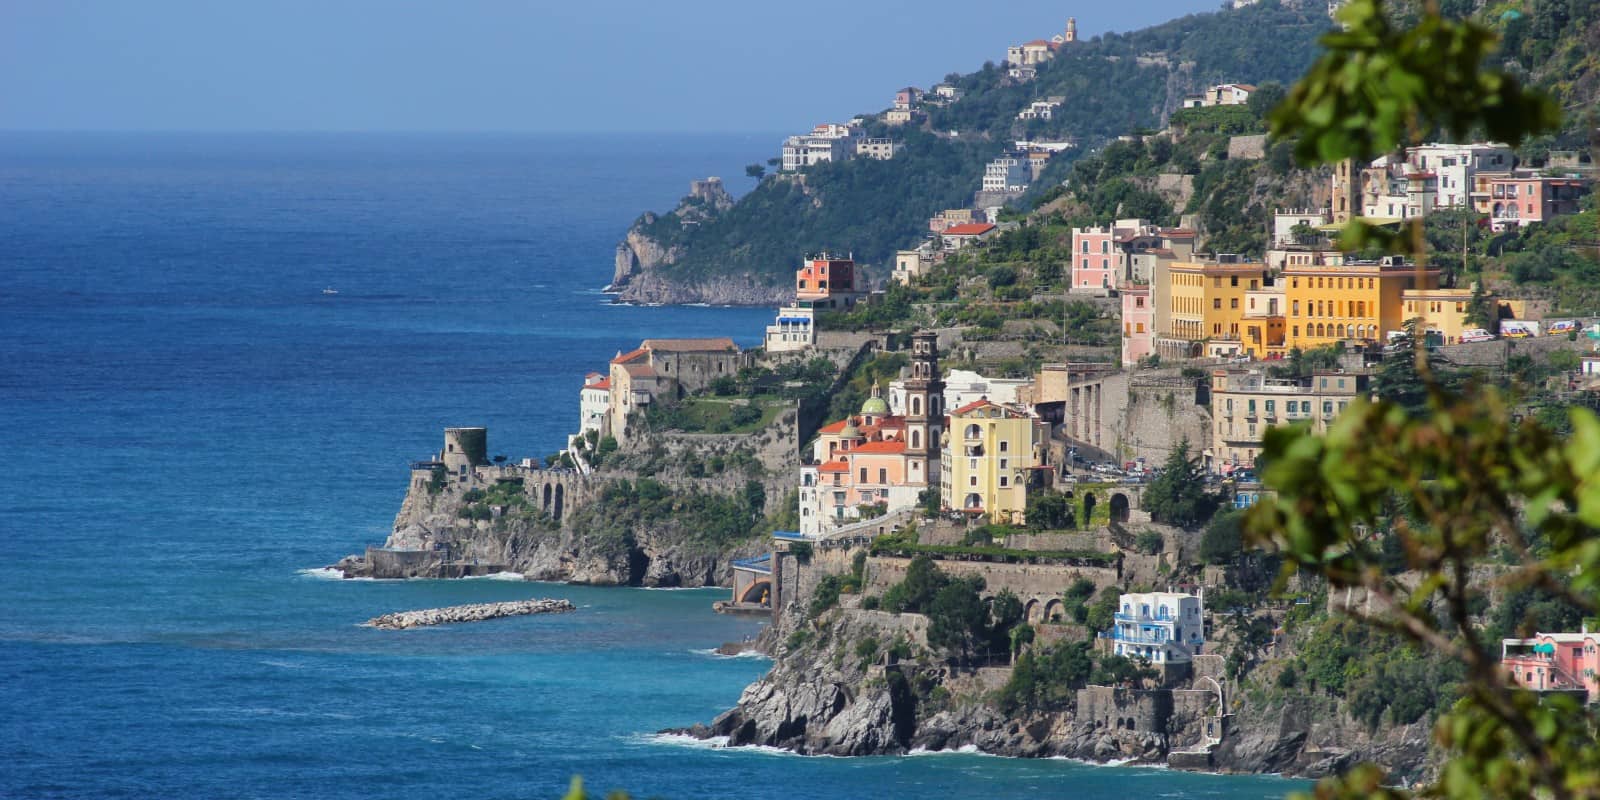 Amalfi Hiking Trail View of the Amalfi Coast from the Sentiero dei Limoni